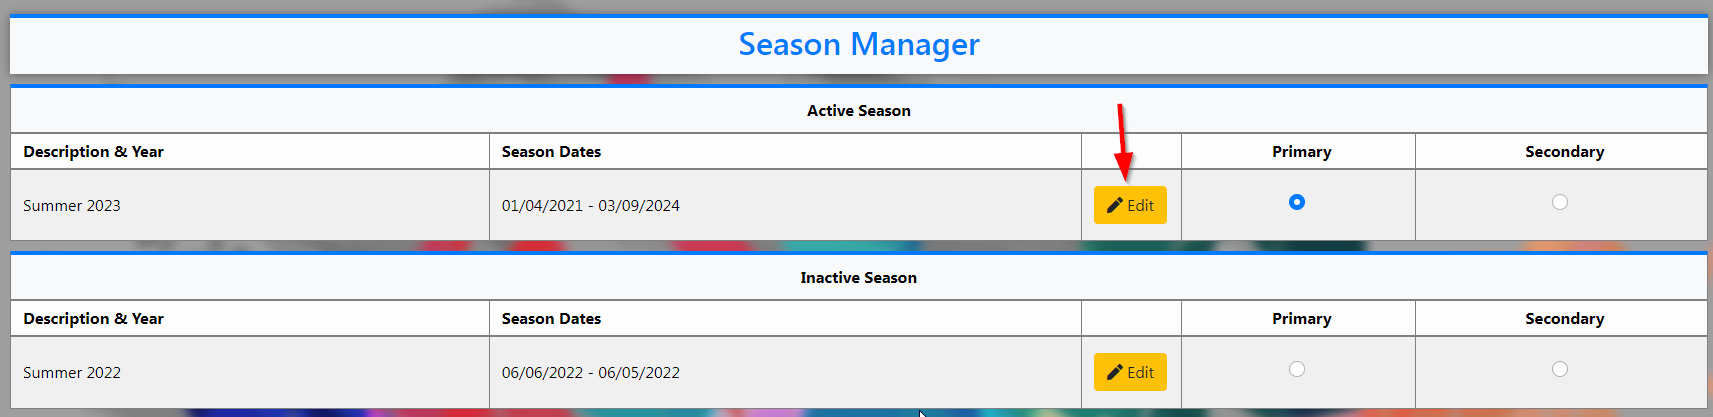 Season Manager List New